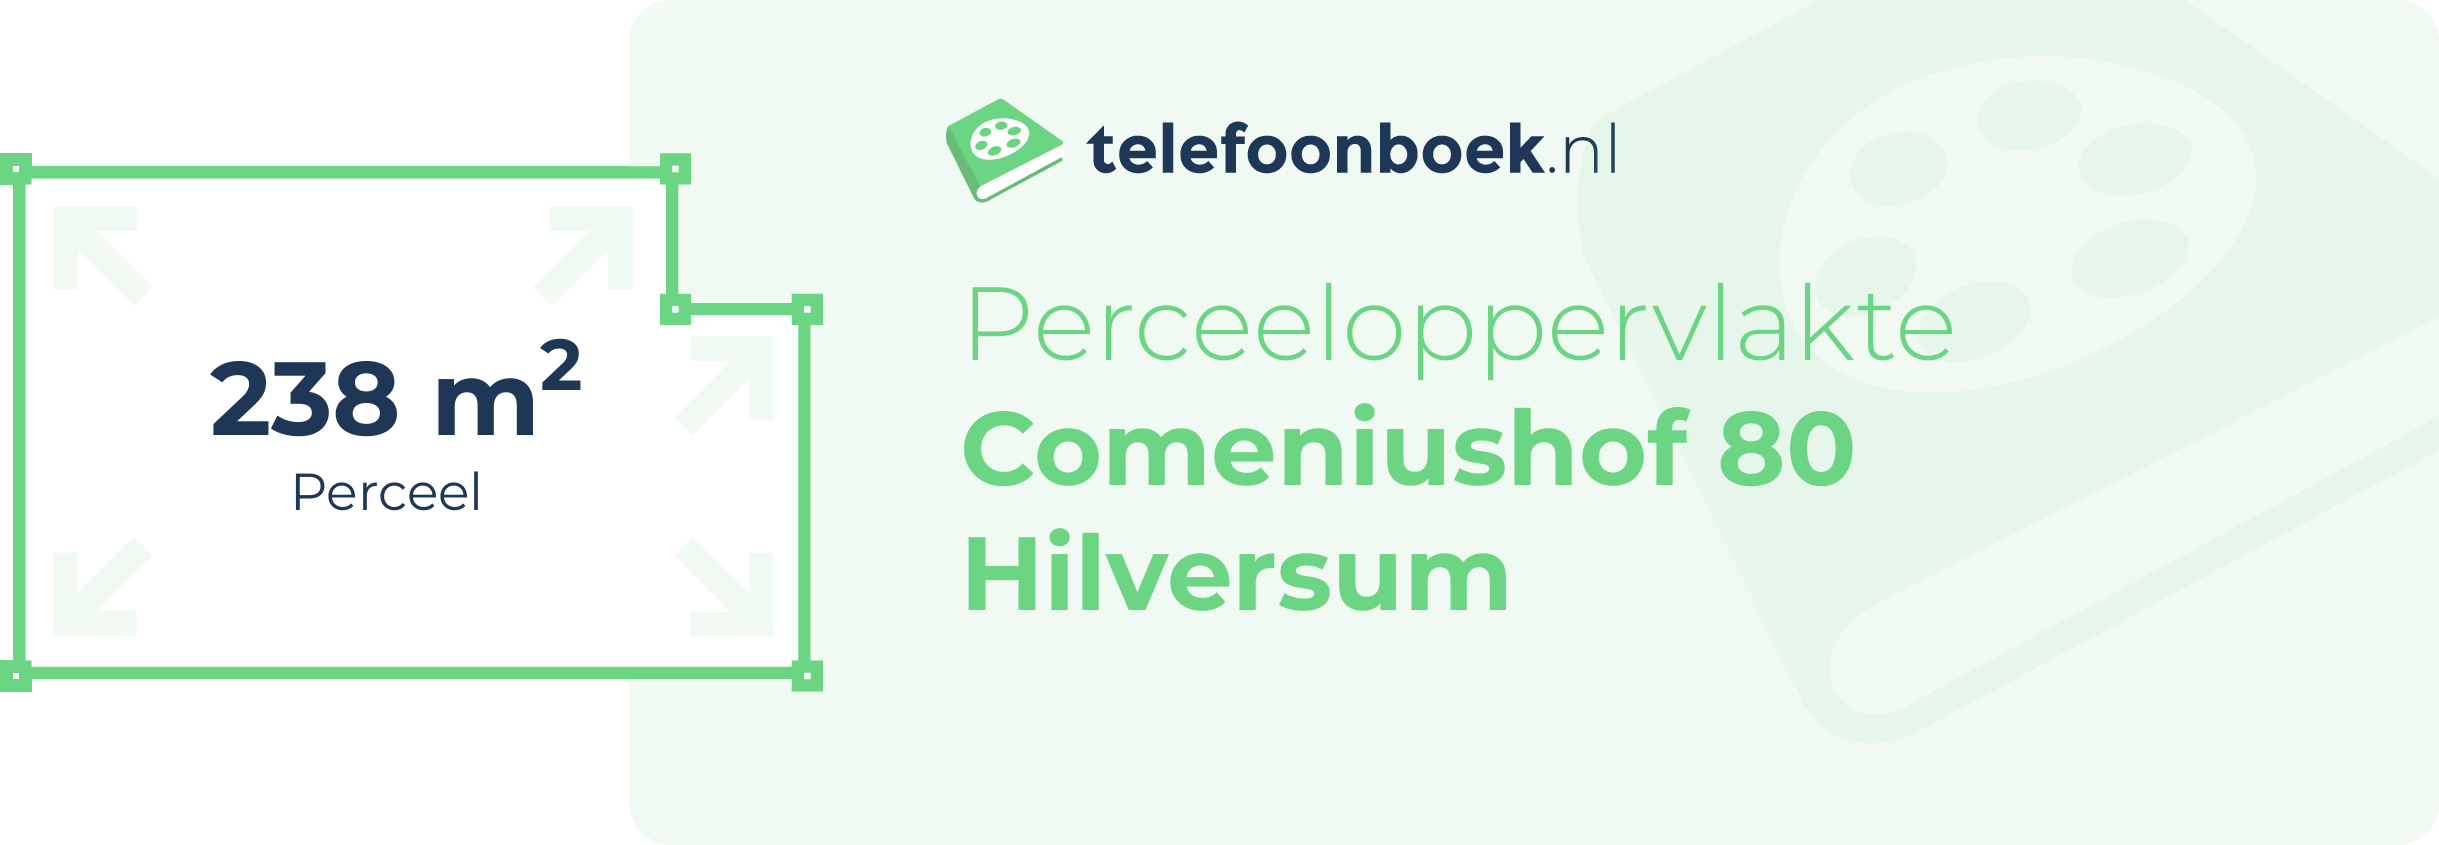 Perceeloppervlakte Comeniushof 80 Hilversum